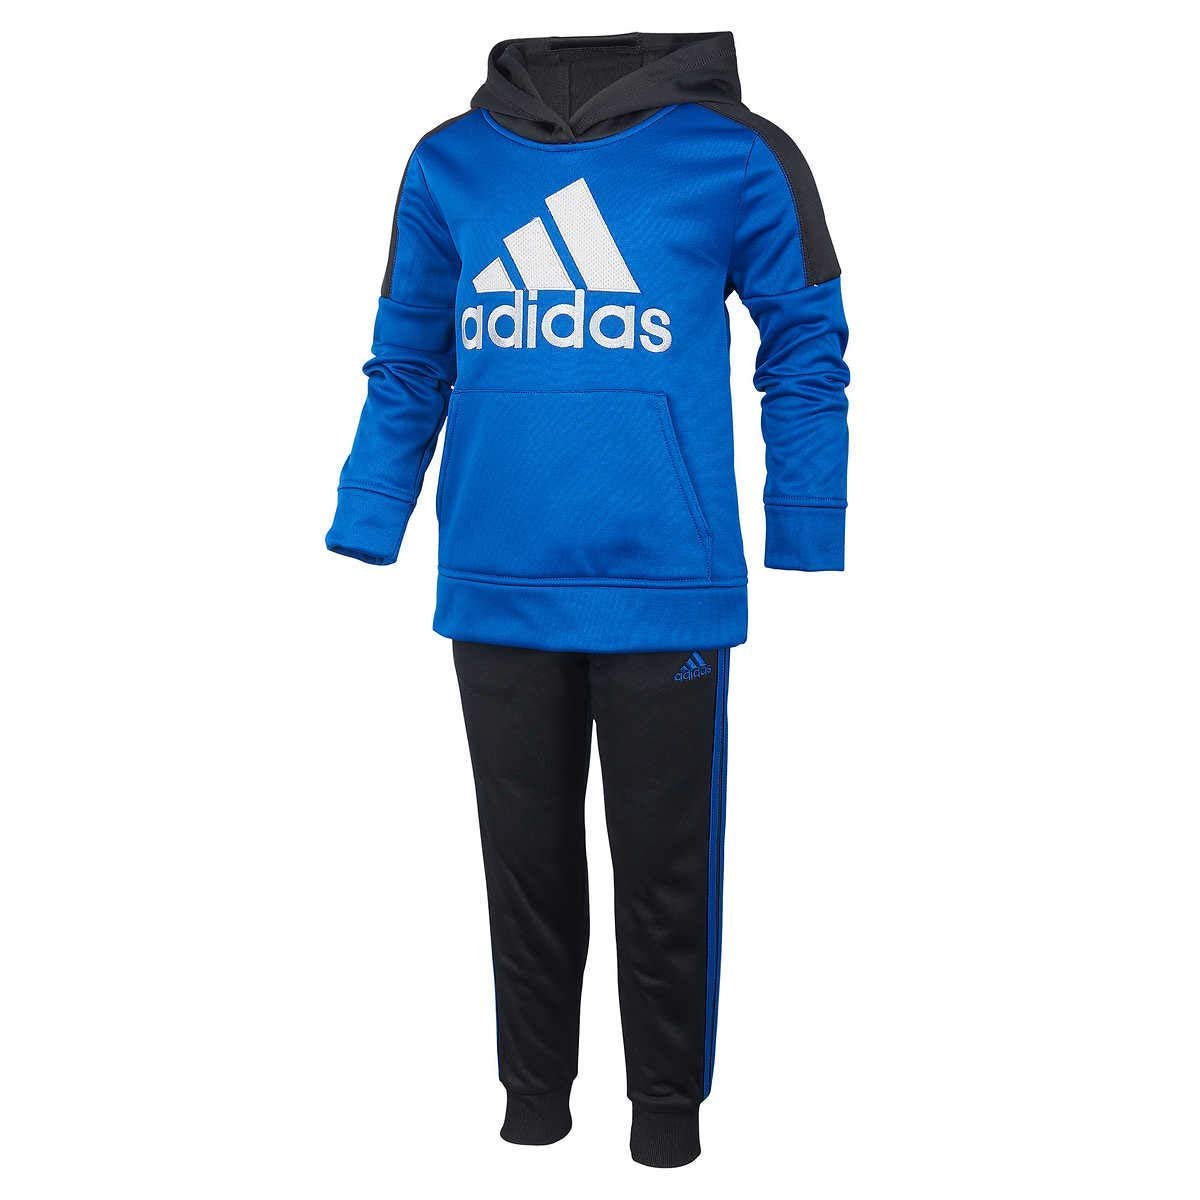 adidas Boys 2 Piece Fleece Lined Active Set (Royal Blue/Black, 2T) - image 1 of 2